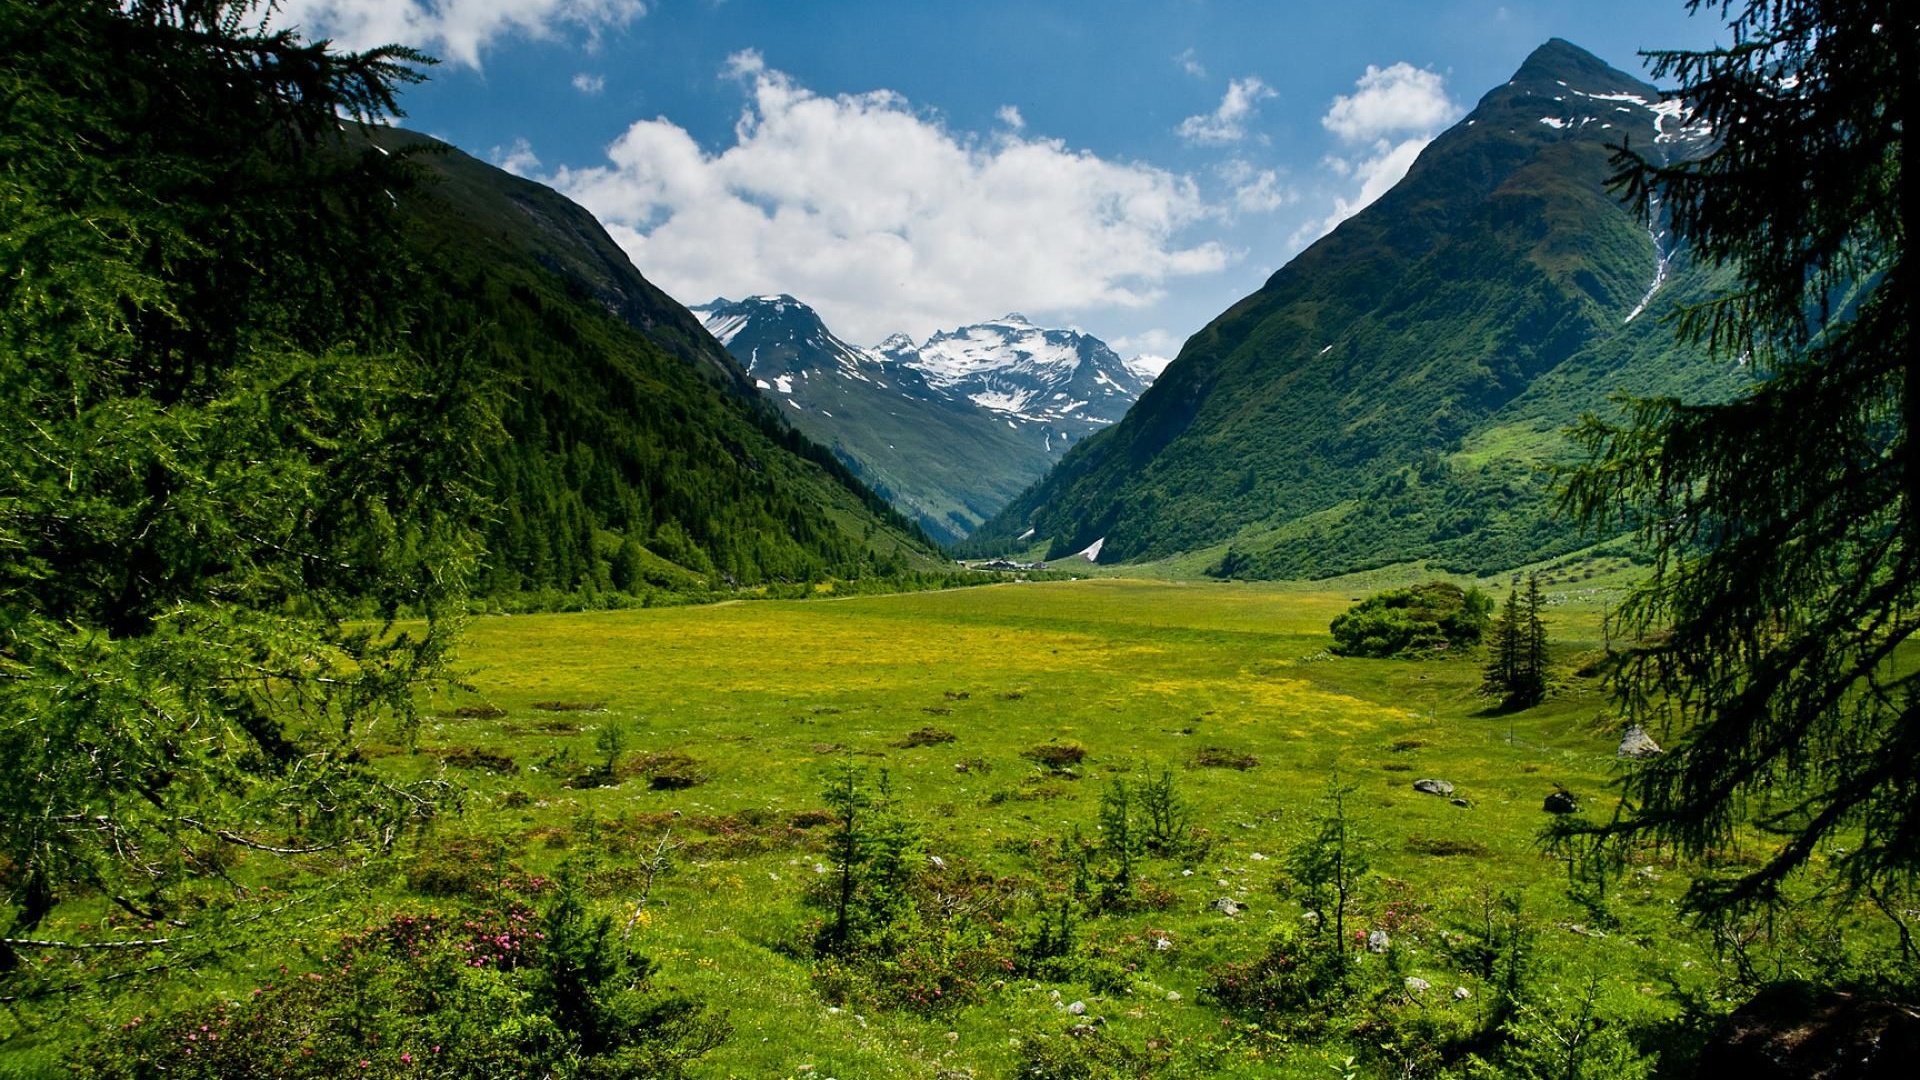 Hohe Tauern National Park Tyrol Austria Fantastic World Mountains Resort Nature Landscapes